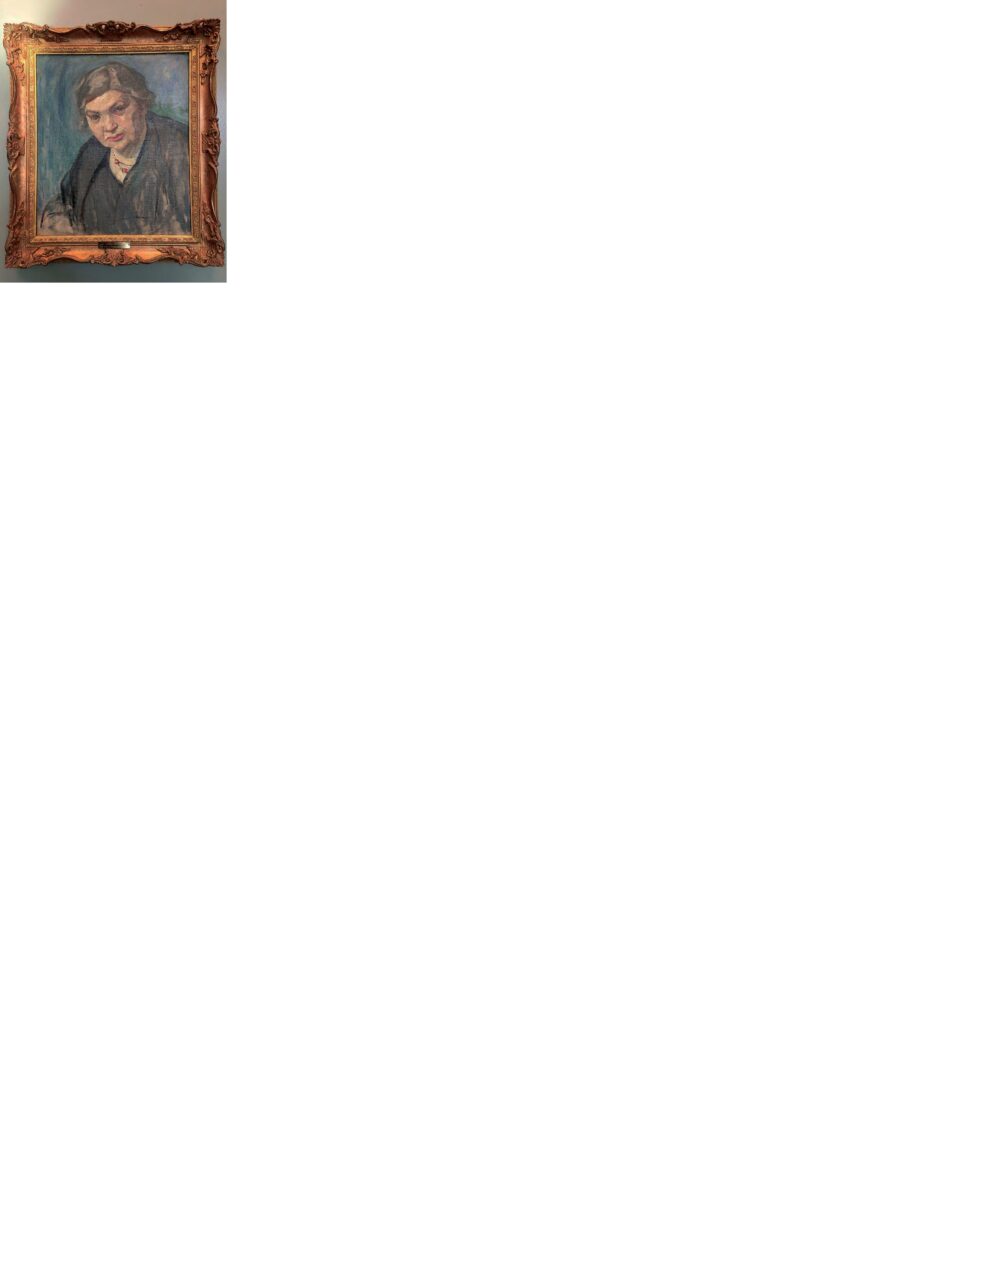 Mary Alexandra Bell Eastlake, Portrait of Maude Abbott, no date, oil on canvas, 20 × 17